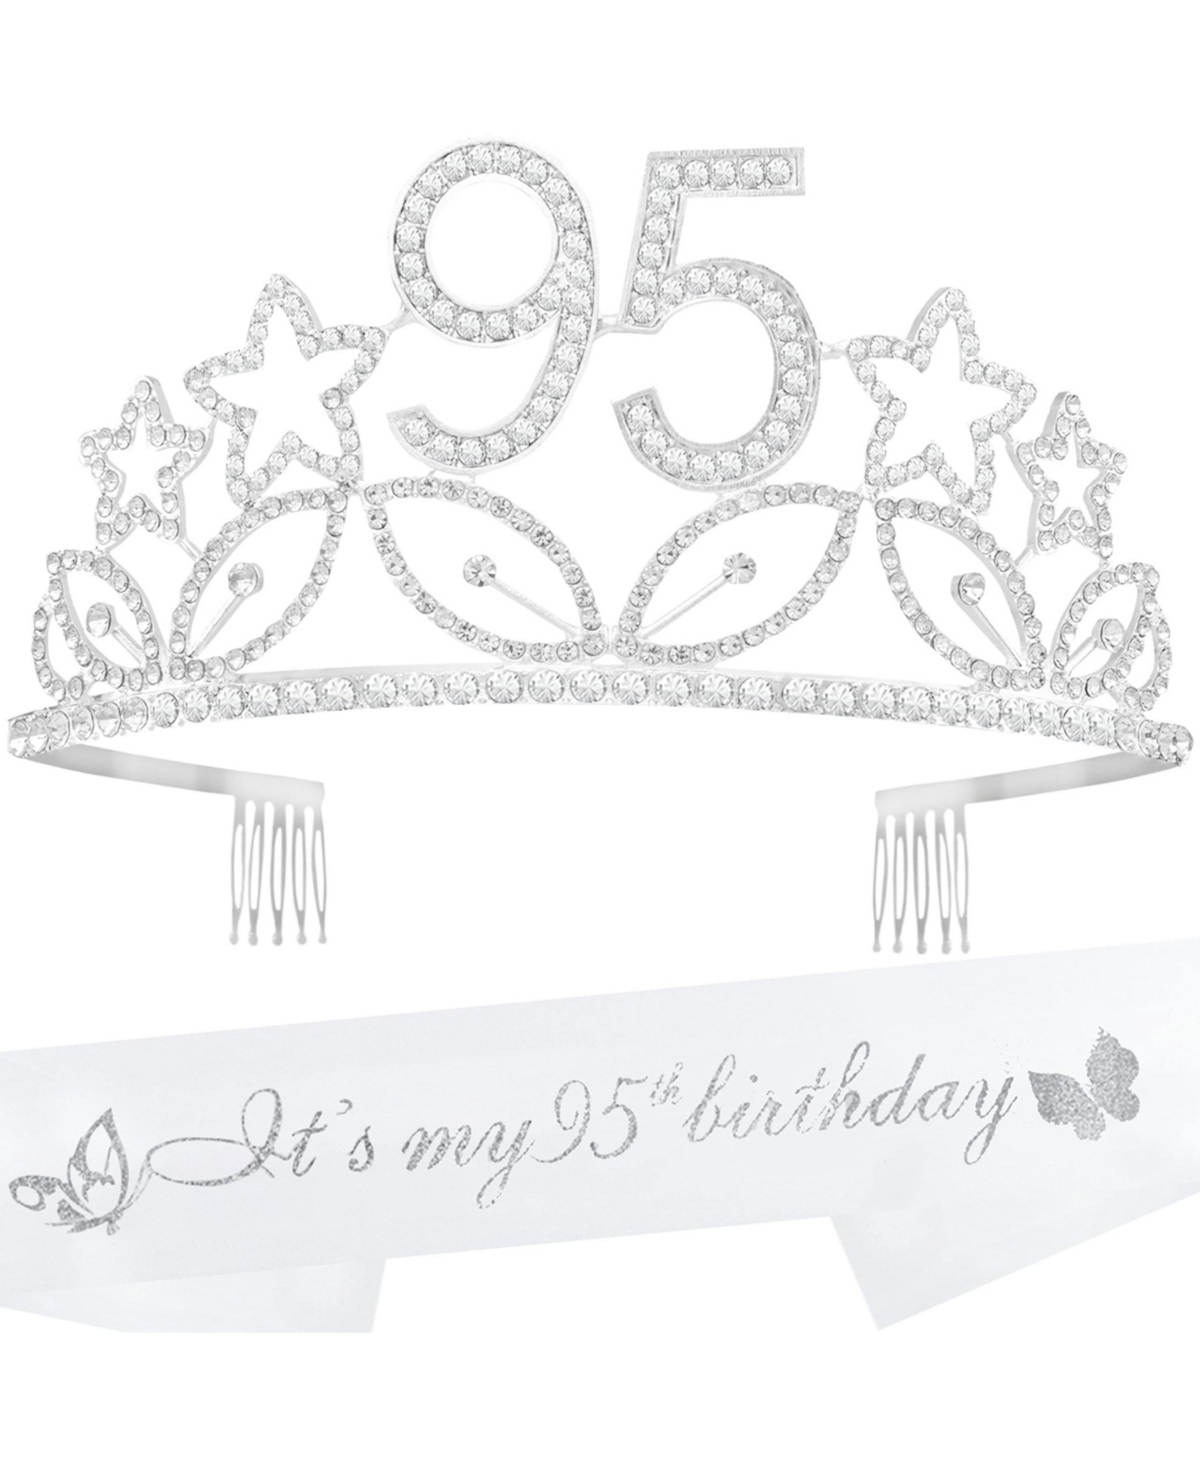 95th Birthday Sash and Tiara Set for Women - Glittery Sash with Stars and Silver Rhinestone Metal Tiara, Perfect Gift for 95th Birthday Cel